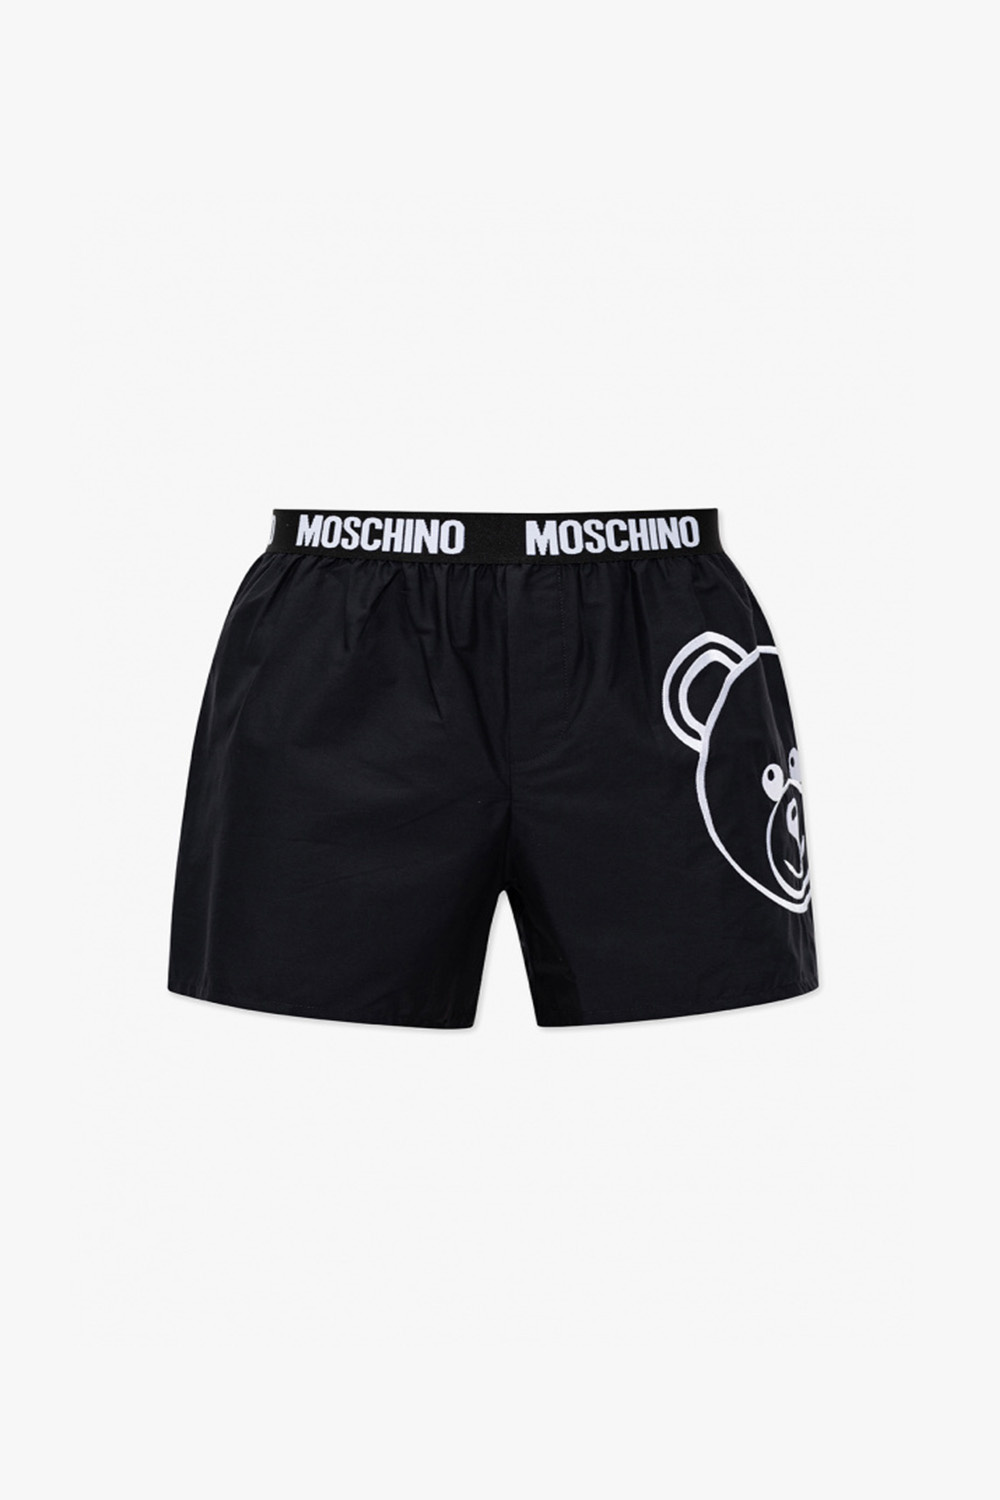 Black Boxers with logo Moschino - Vitkac Germany